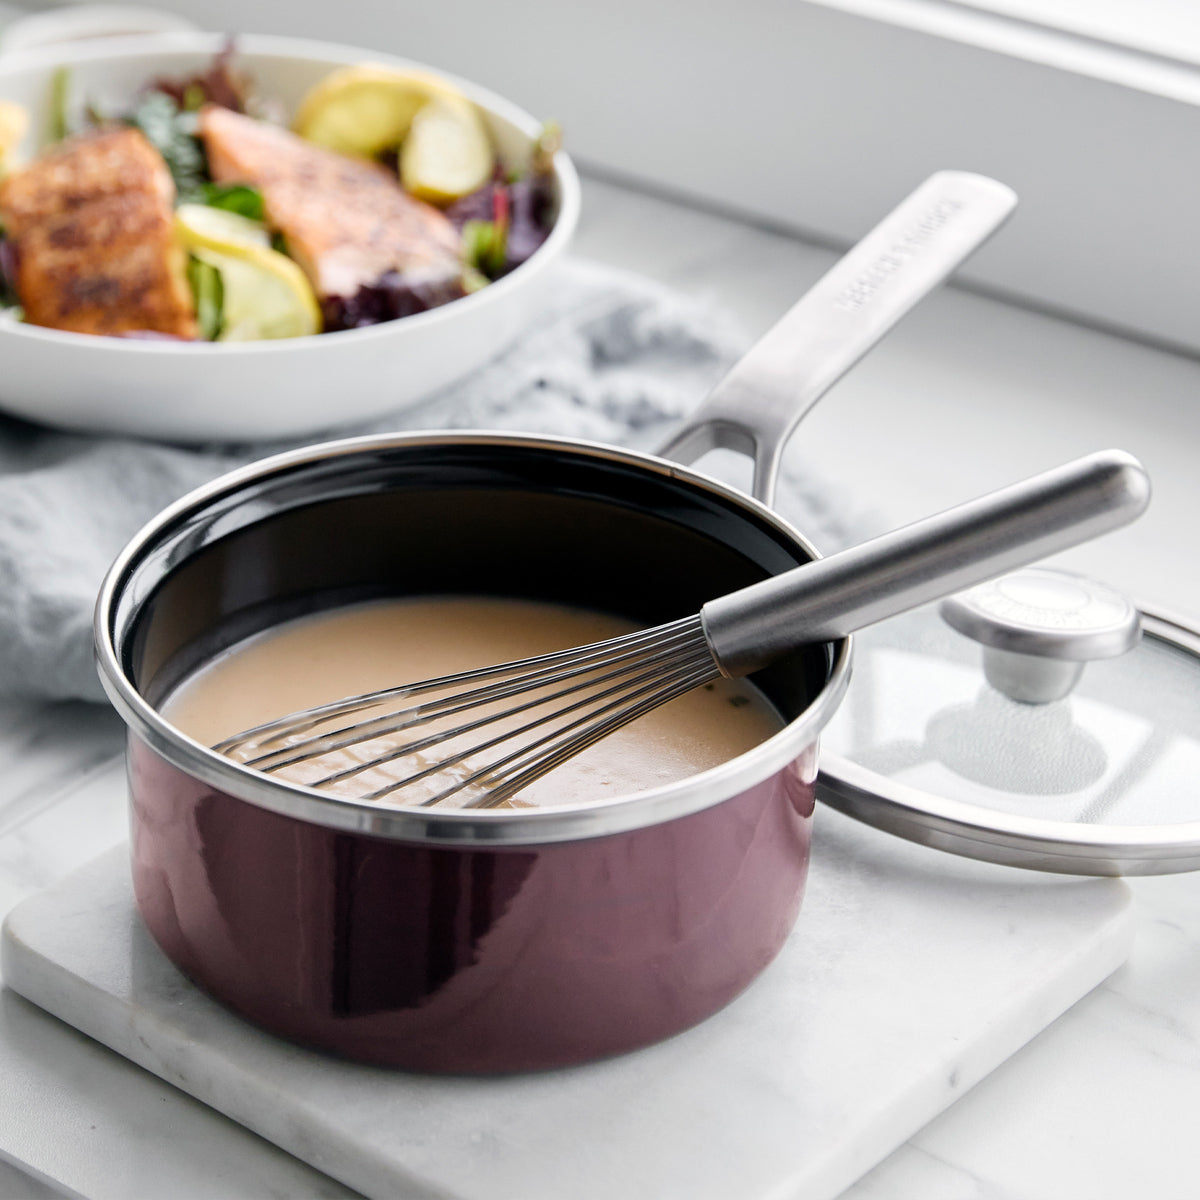 Merten & Storck Stainless Steel 1.5-Quart Saucepan with Lid